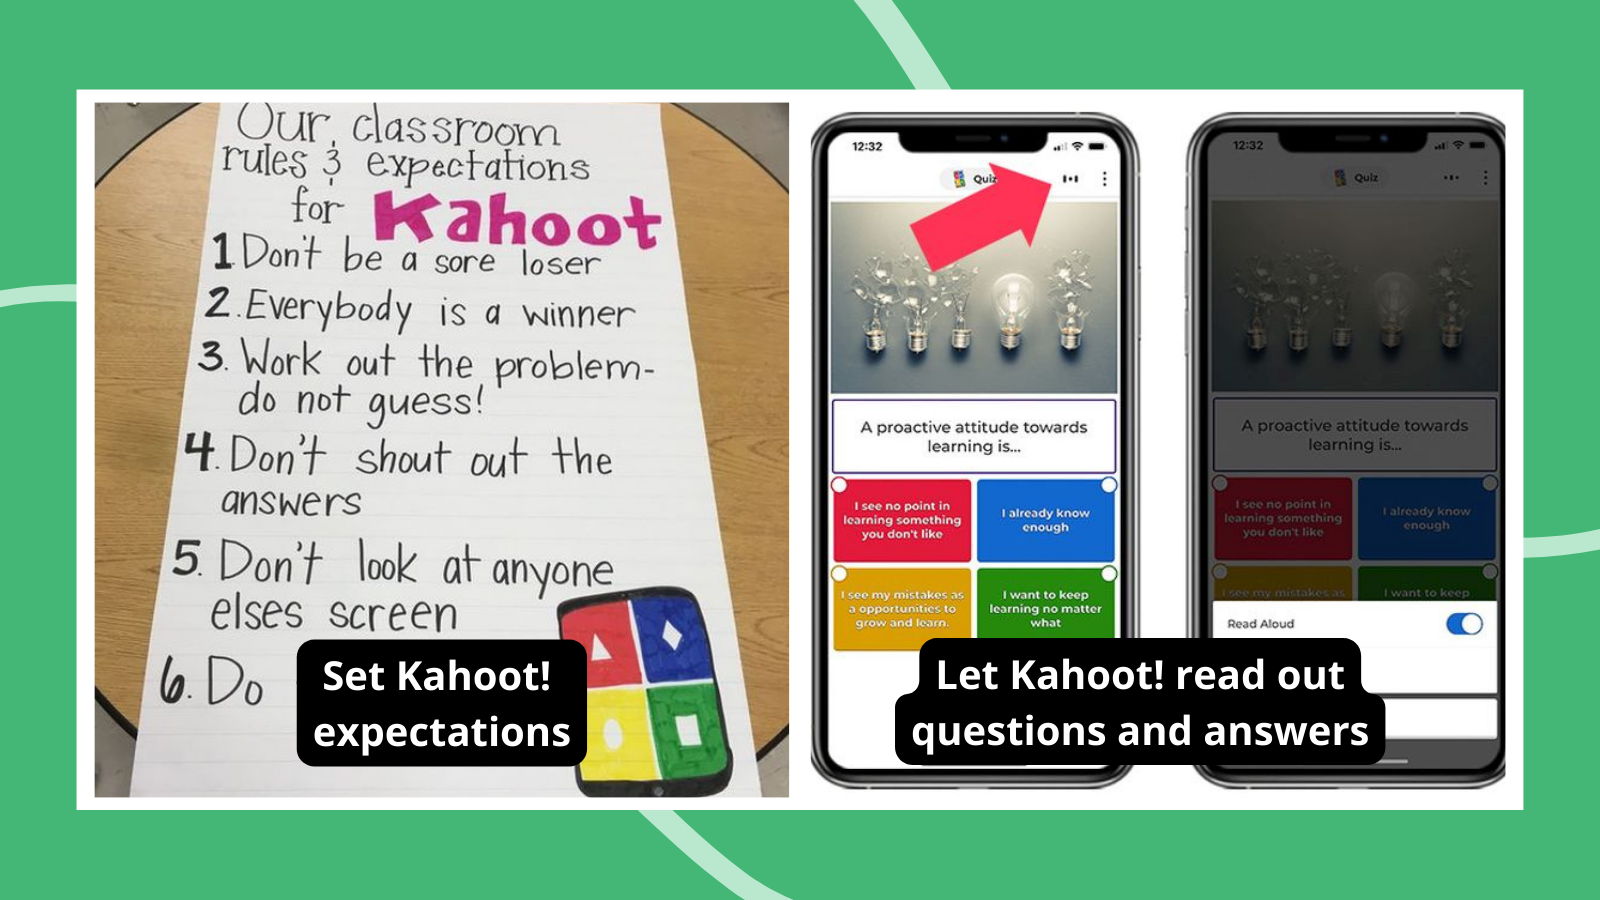 Kahoot Ideas and Tips. Text reads "Set Kahoot! expectations" and "Let Kahoot! read out questions and answers"